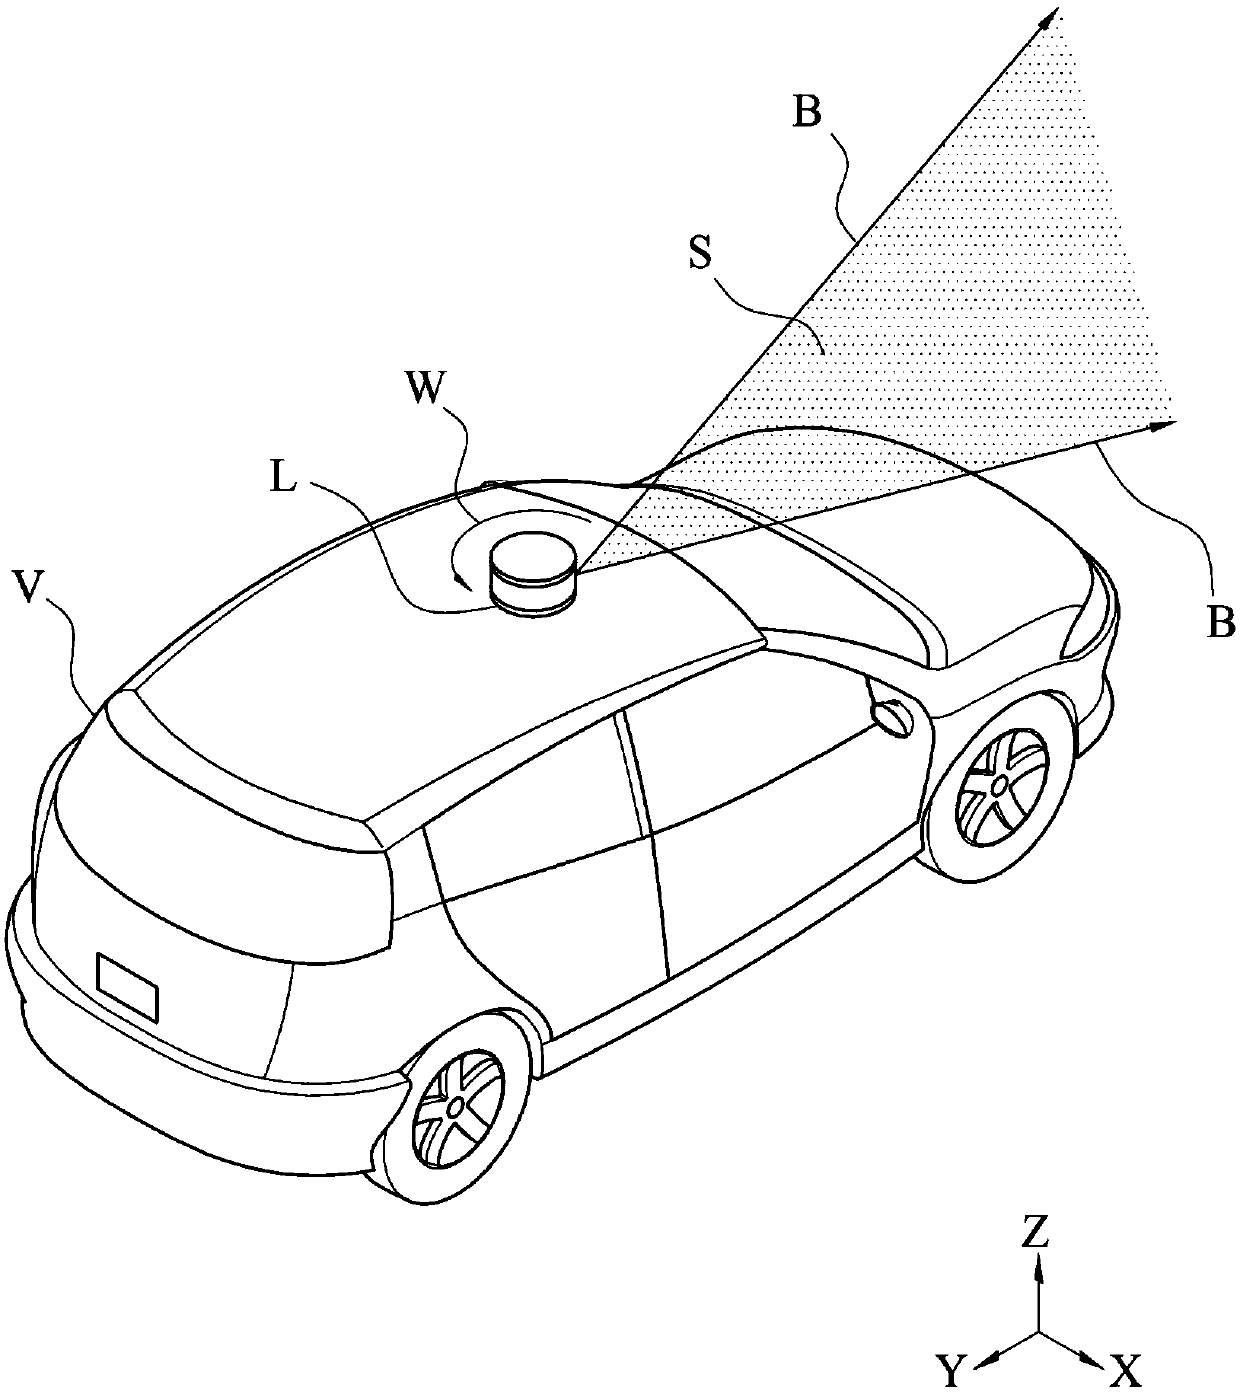 Optical radar-based driving assisting method